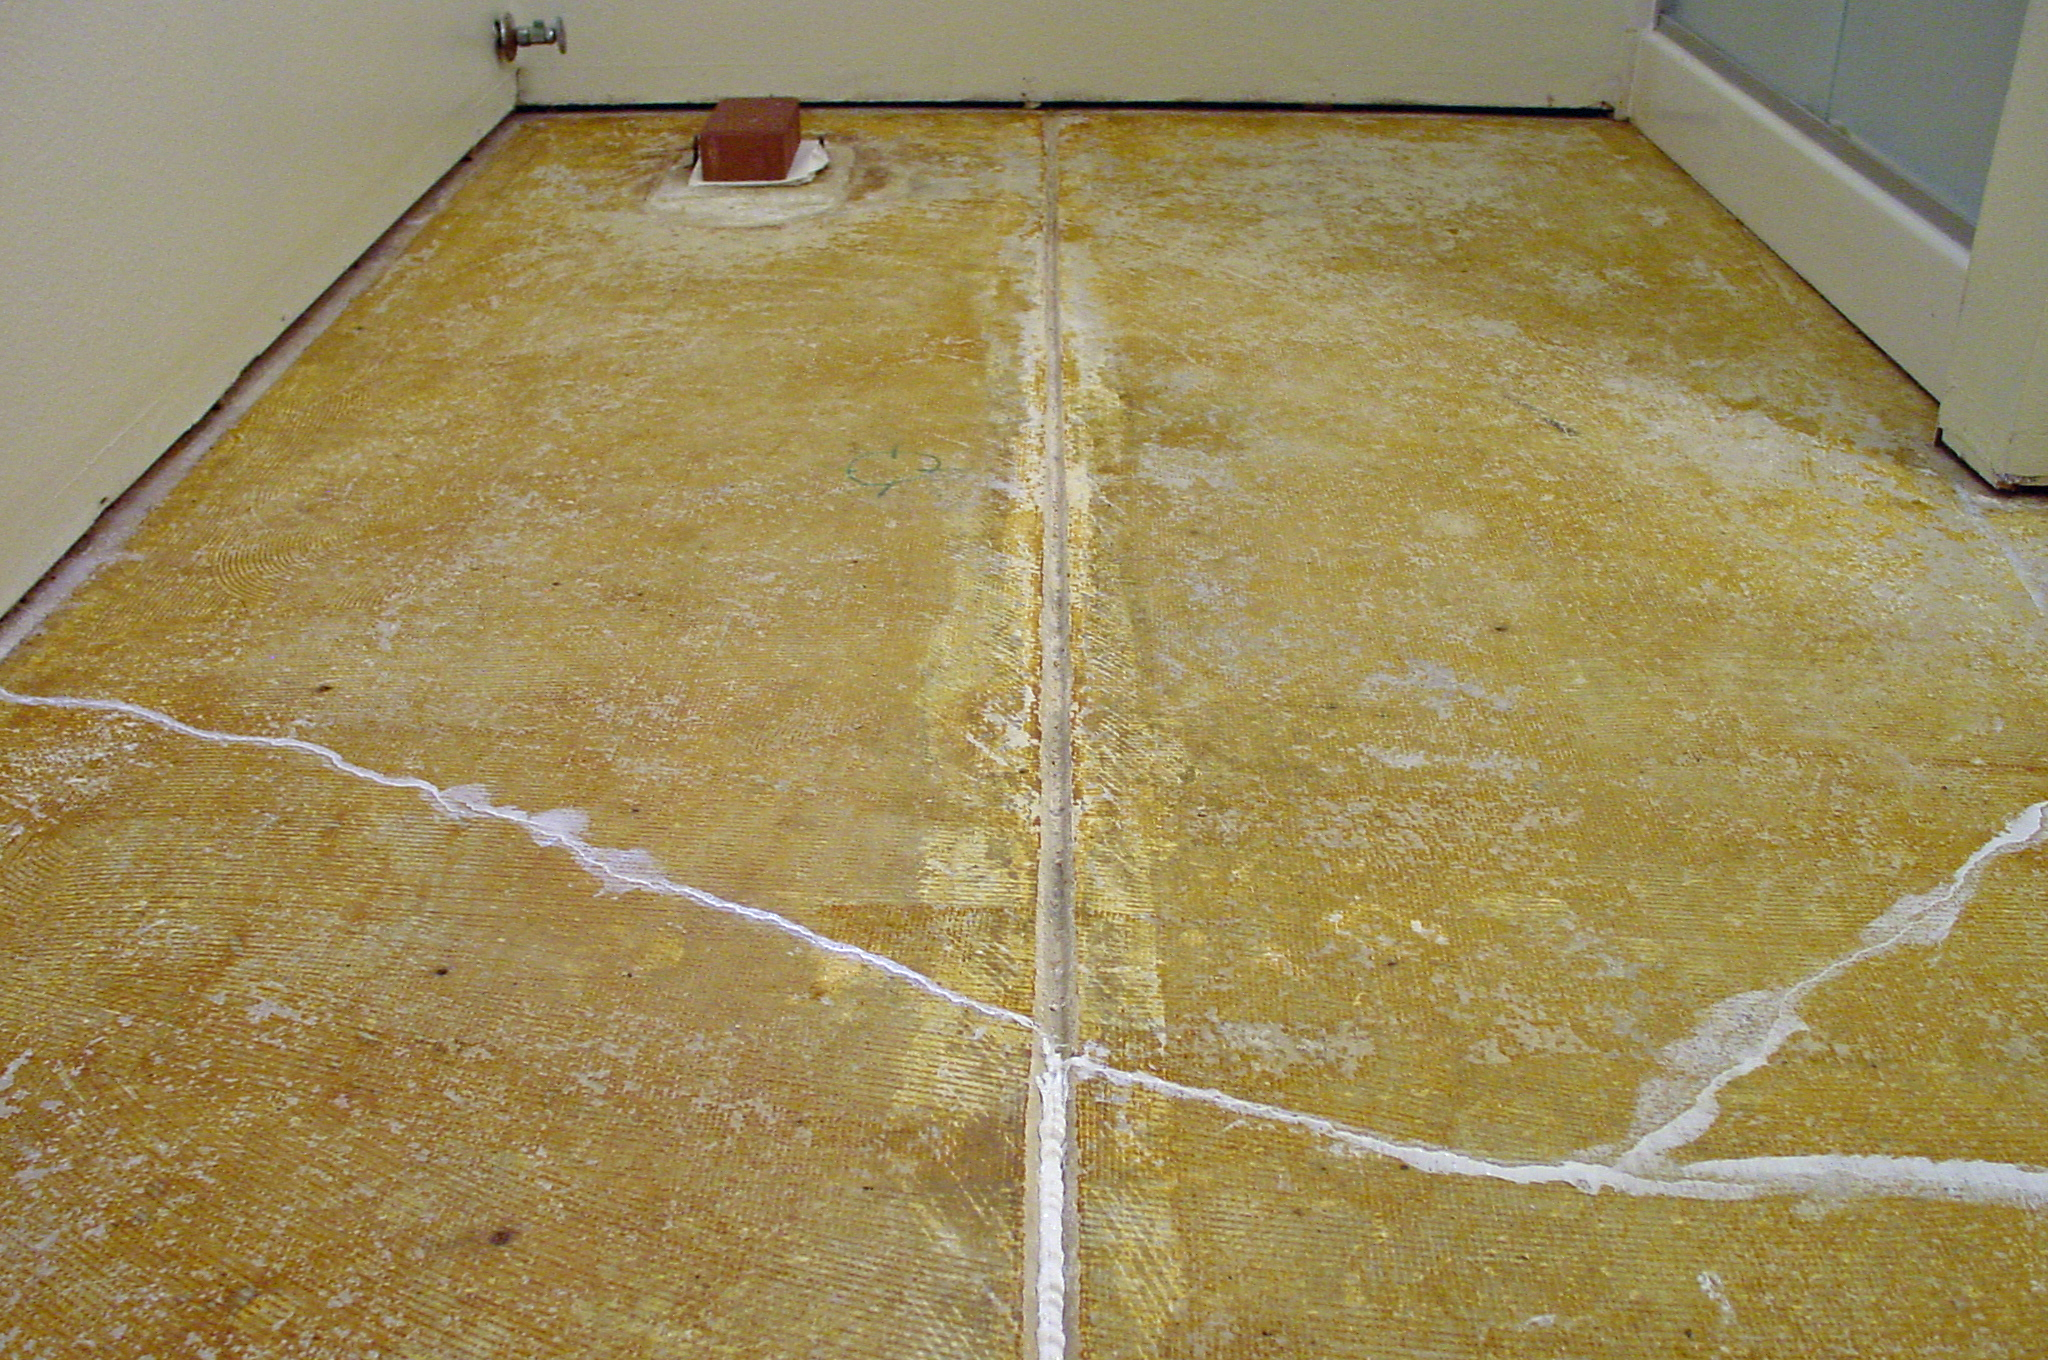 Ceramic Tile Floor Over A Concrete Slab, Installing Ceramic Tile On Concrete Basement Floor